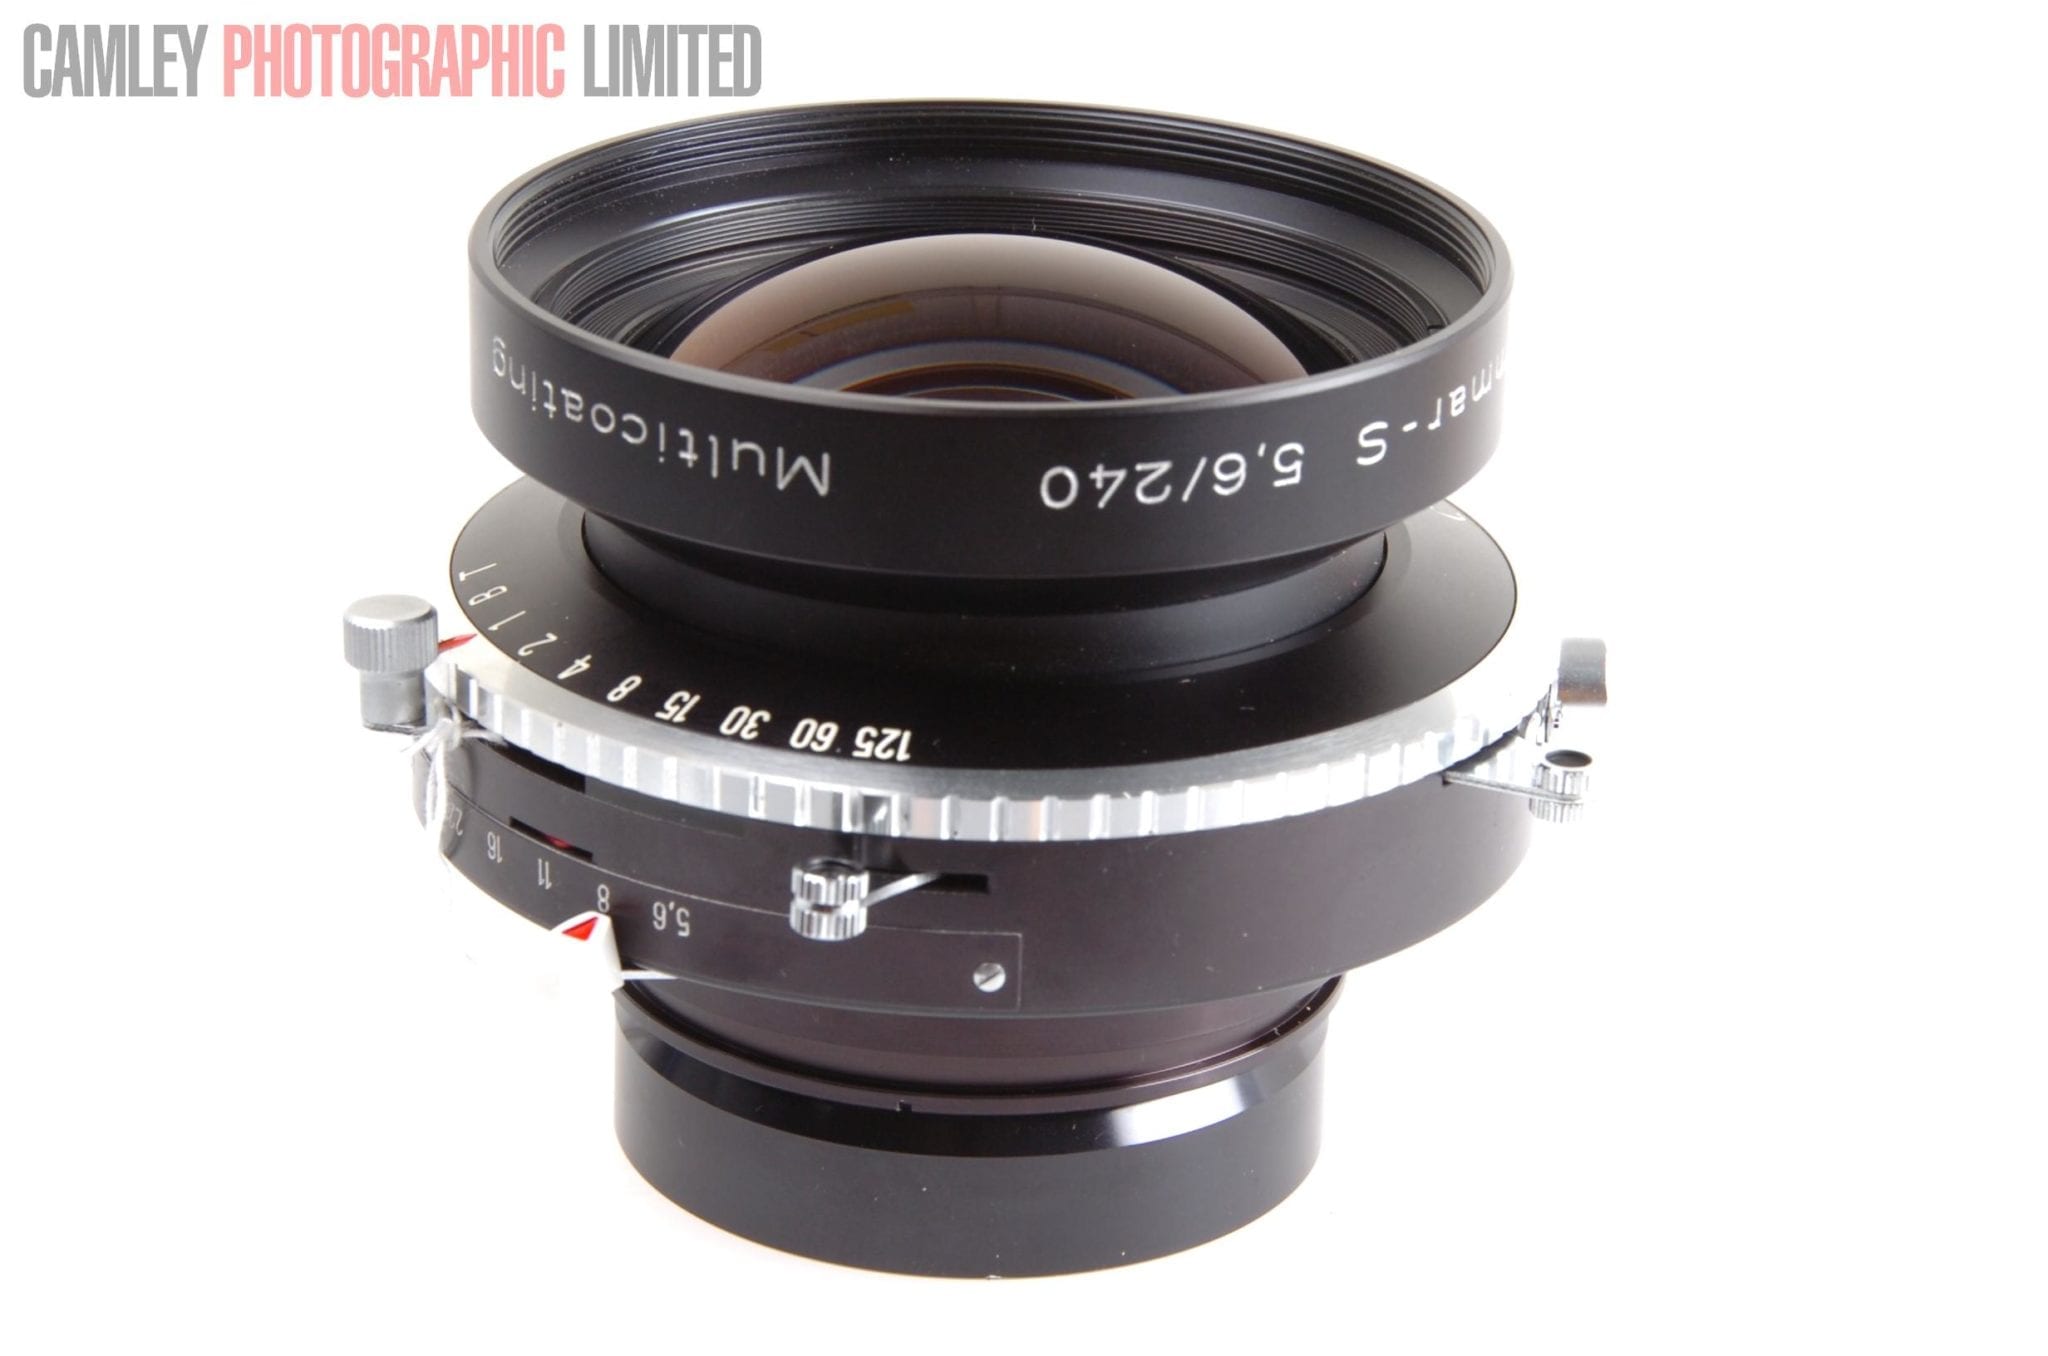 Schneider Symmar-S f5.6 240mm Lens for 8×10. Graded: LN- [#8748